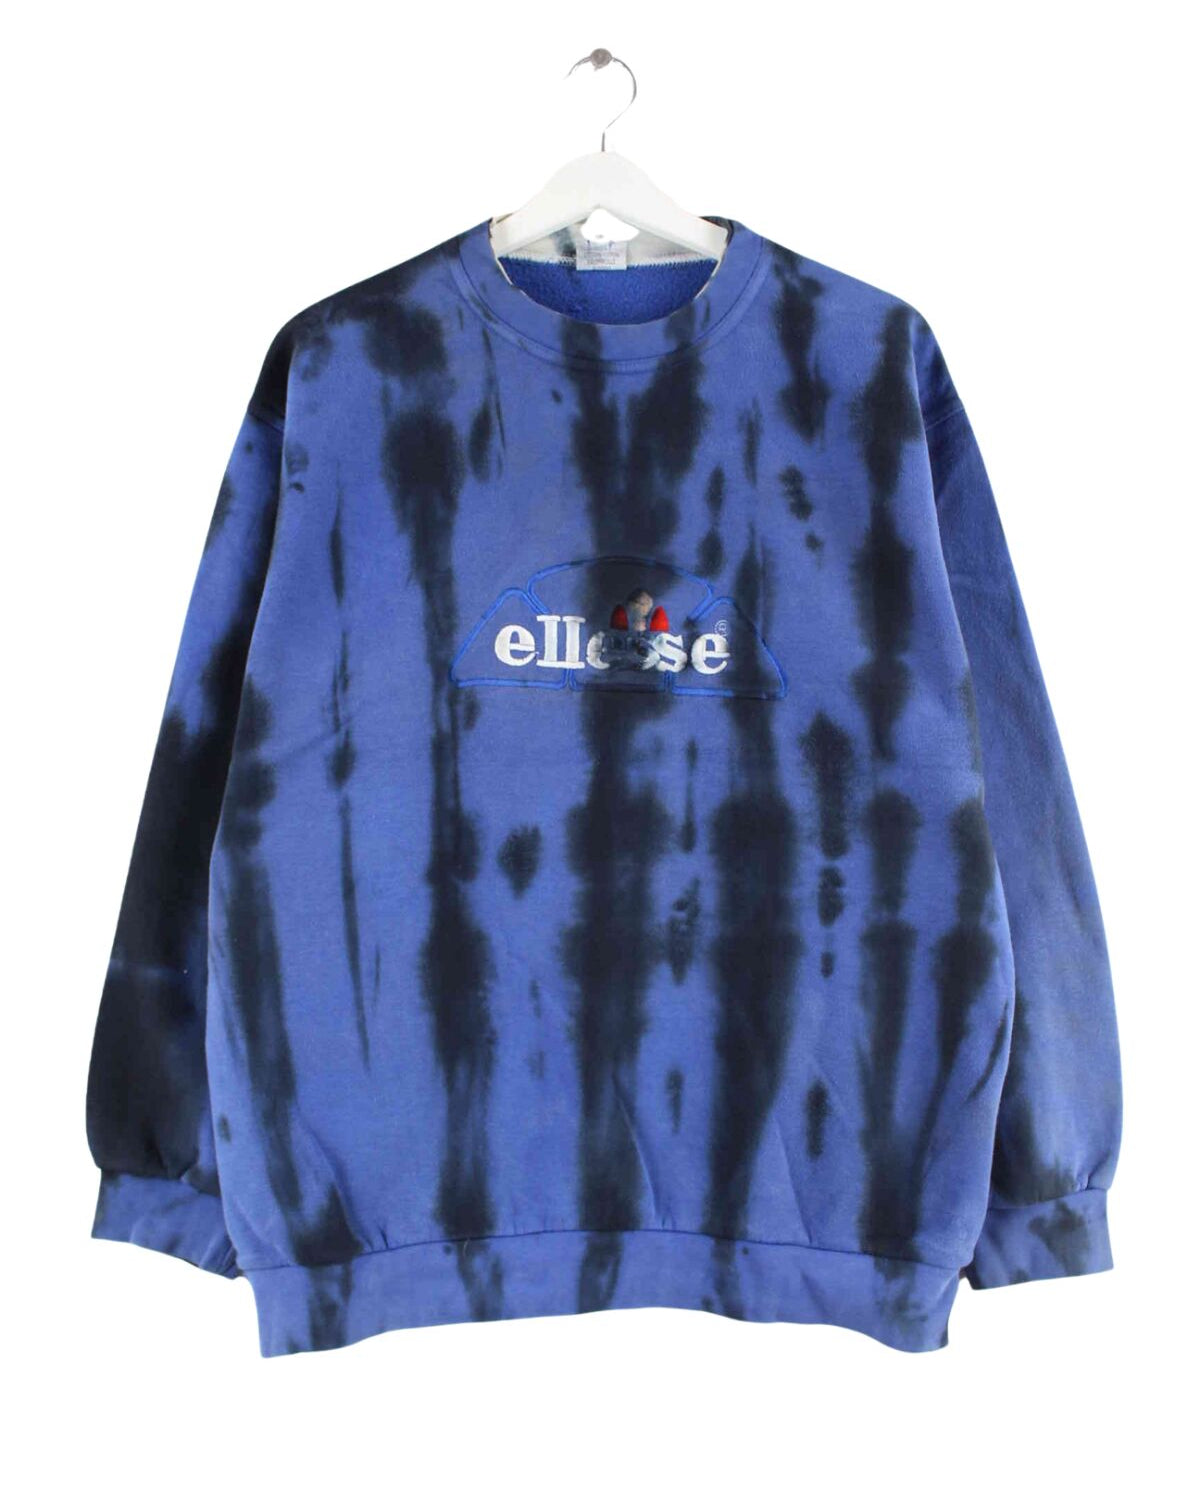 Ellesse 90s Vintage Embroidered Tie Dye Sweater Blau M (front image)